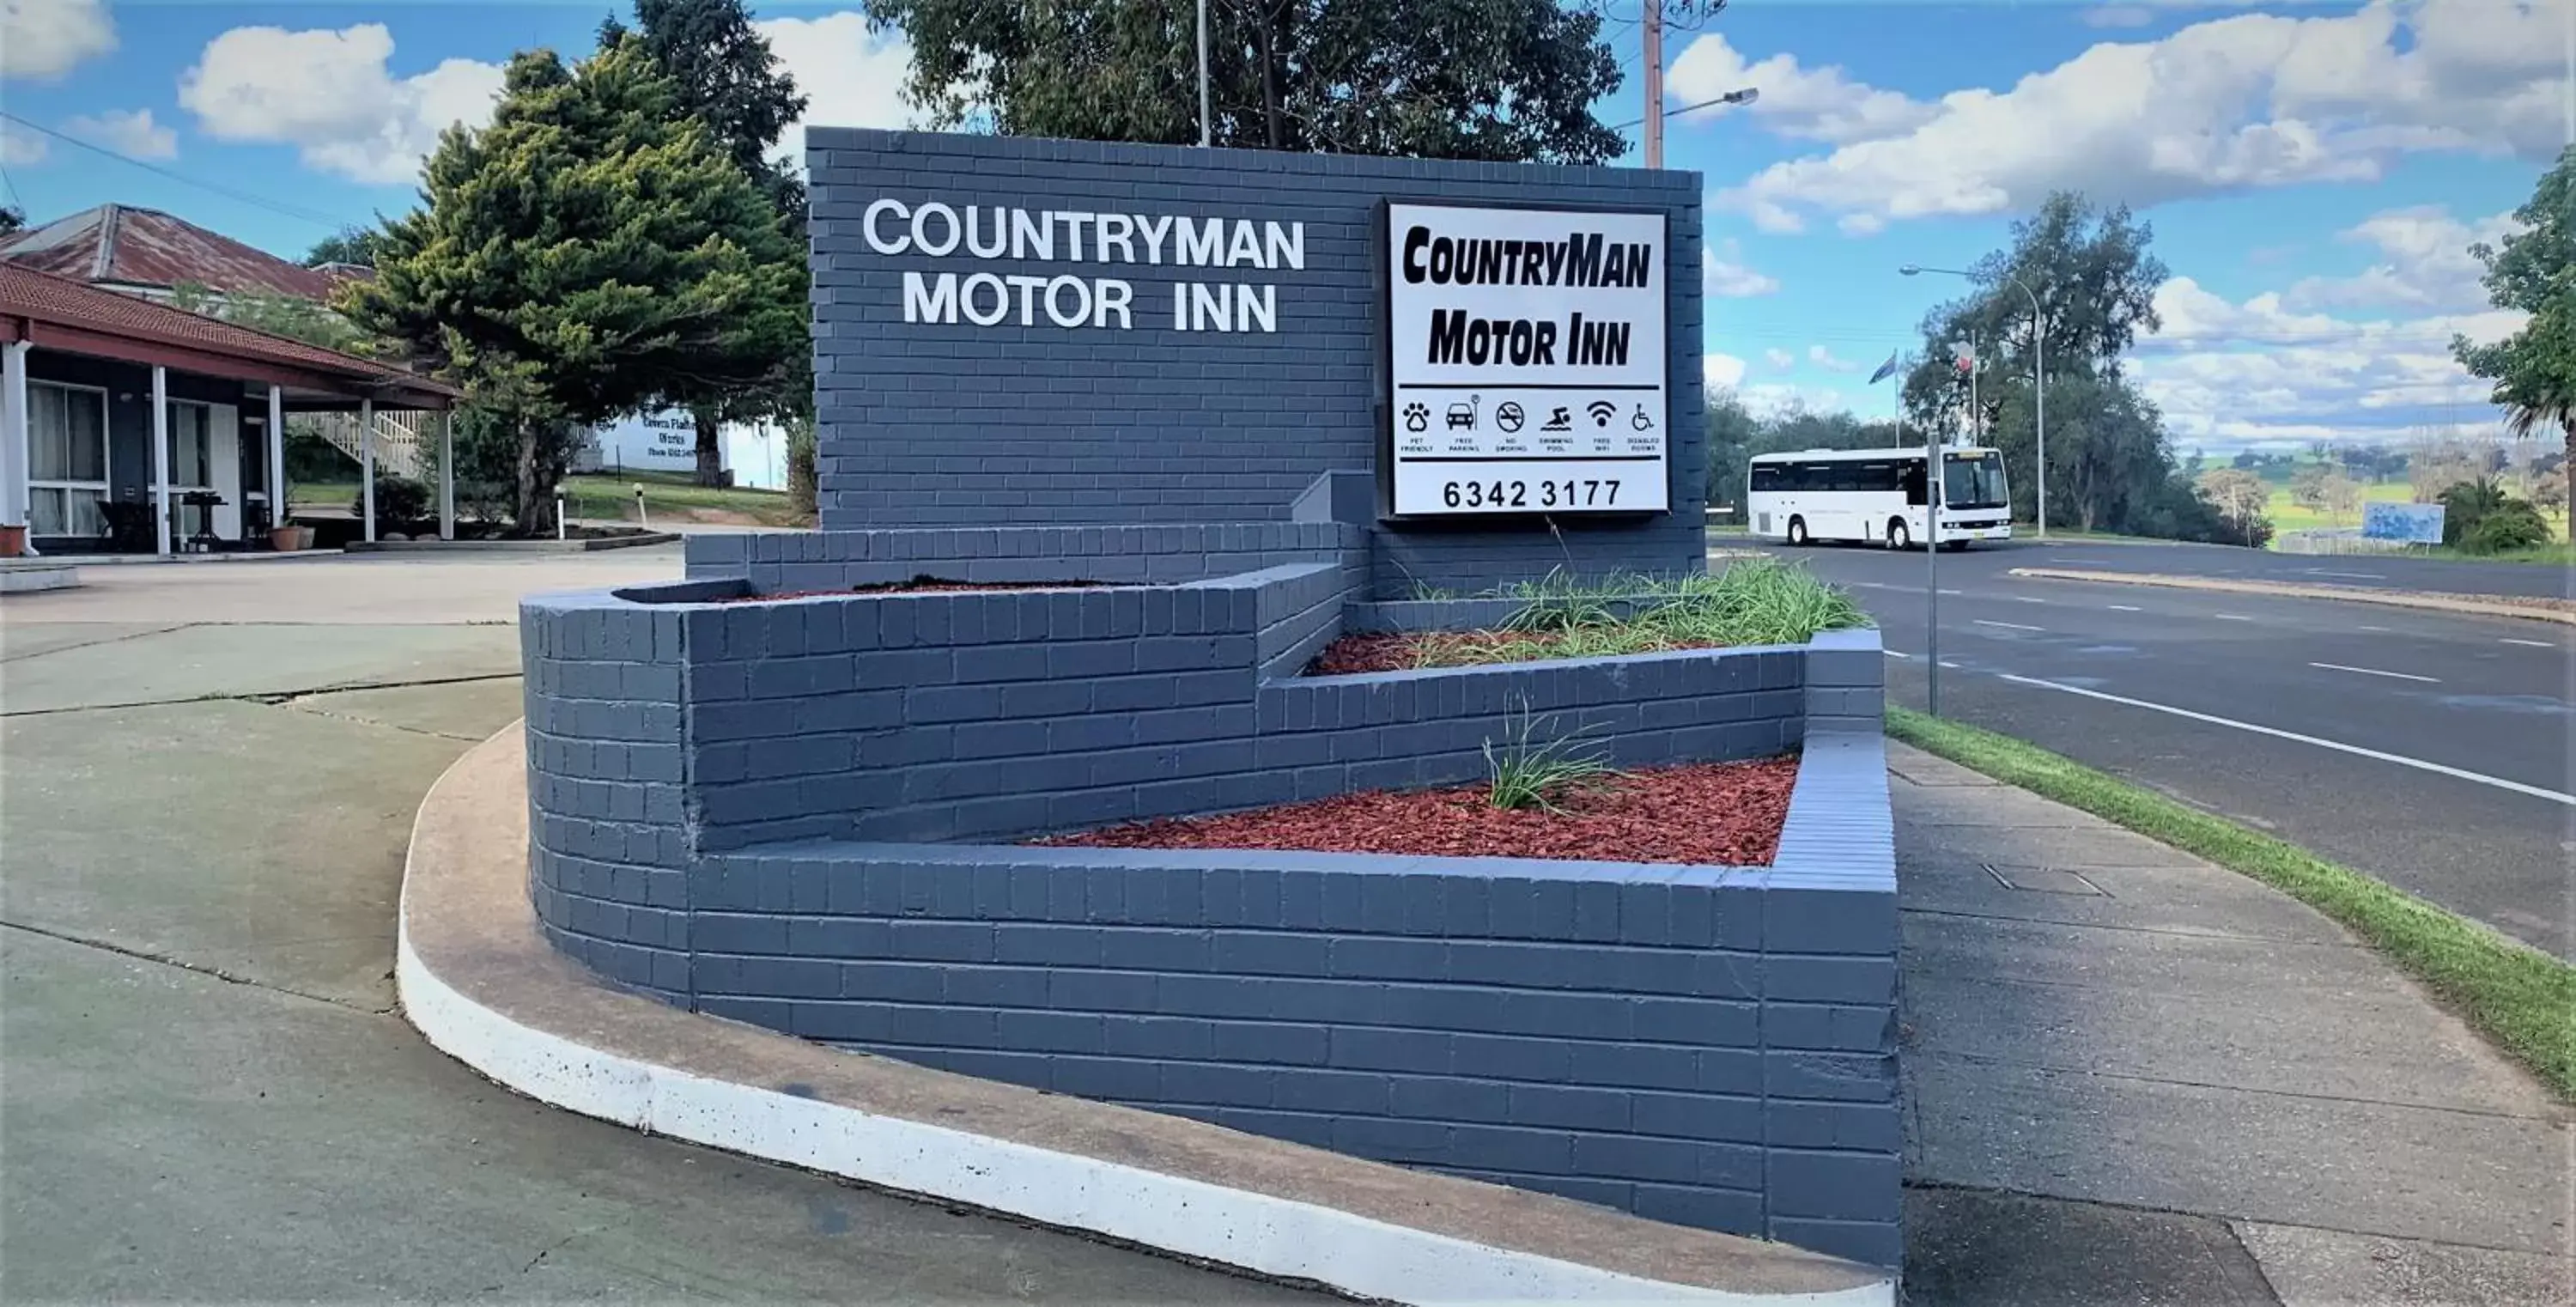 Countryman Motor Inn Cowra